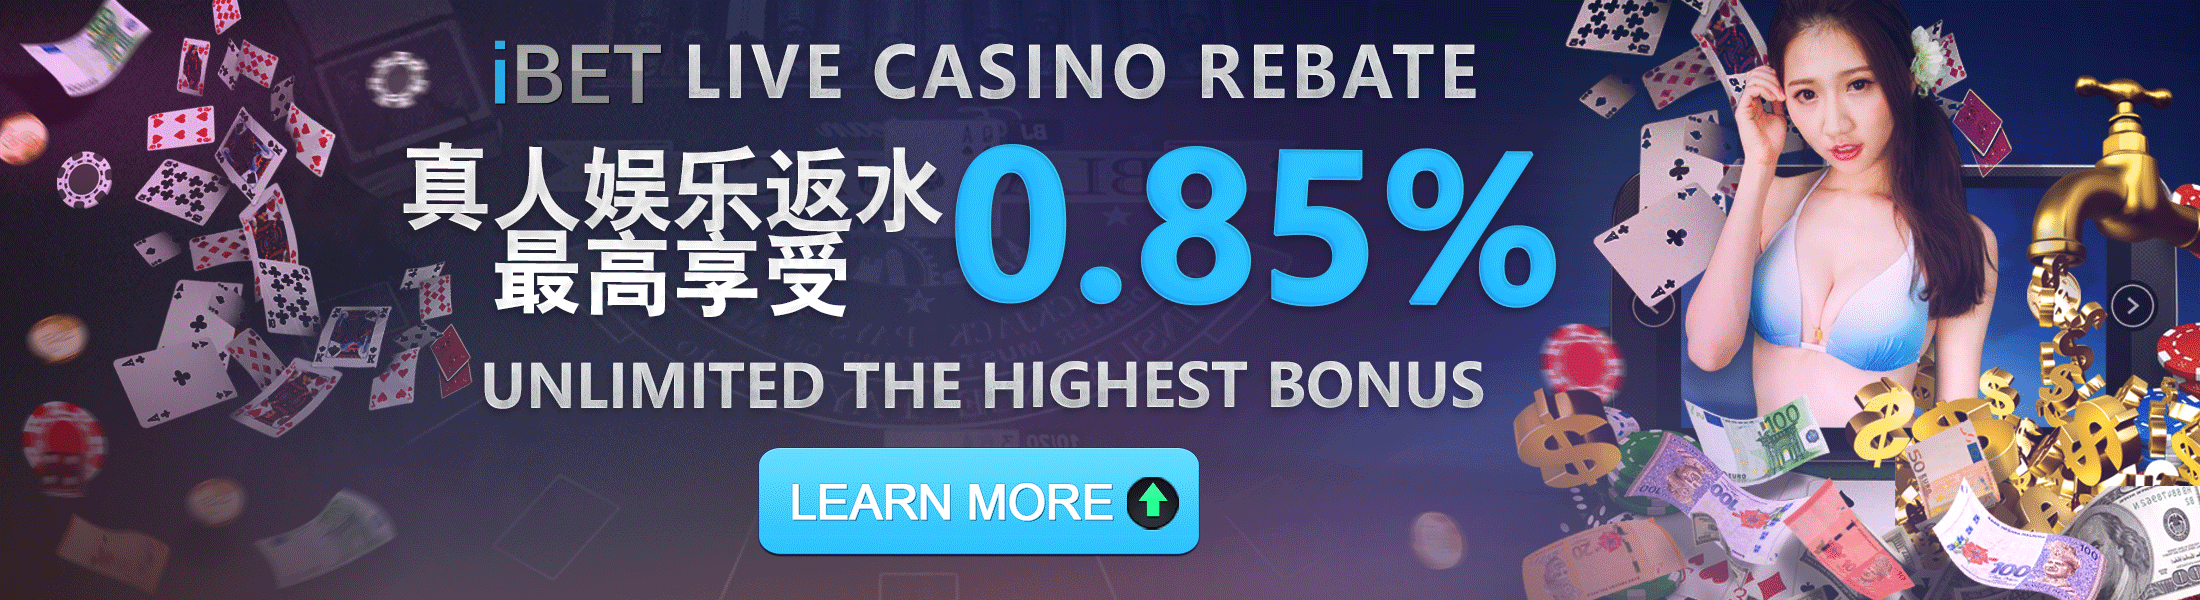 4D Result Cashback 0.75% Live Casino add 0.1%